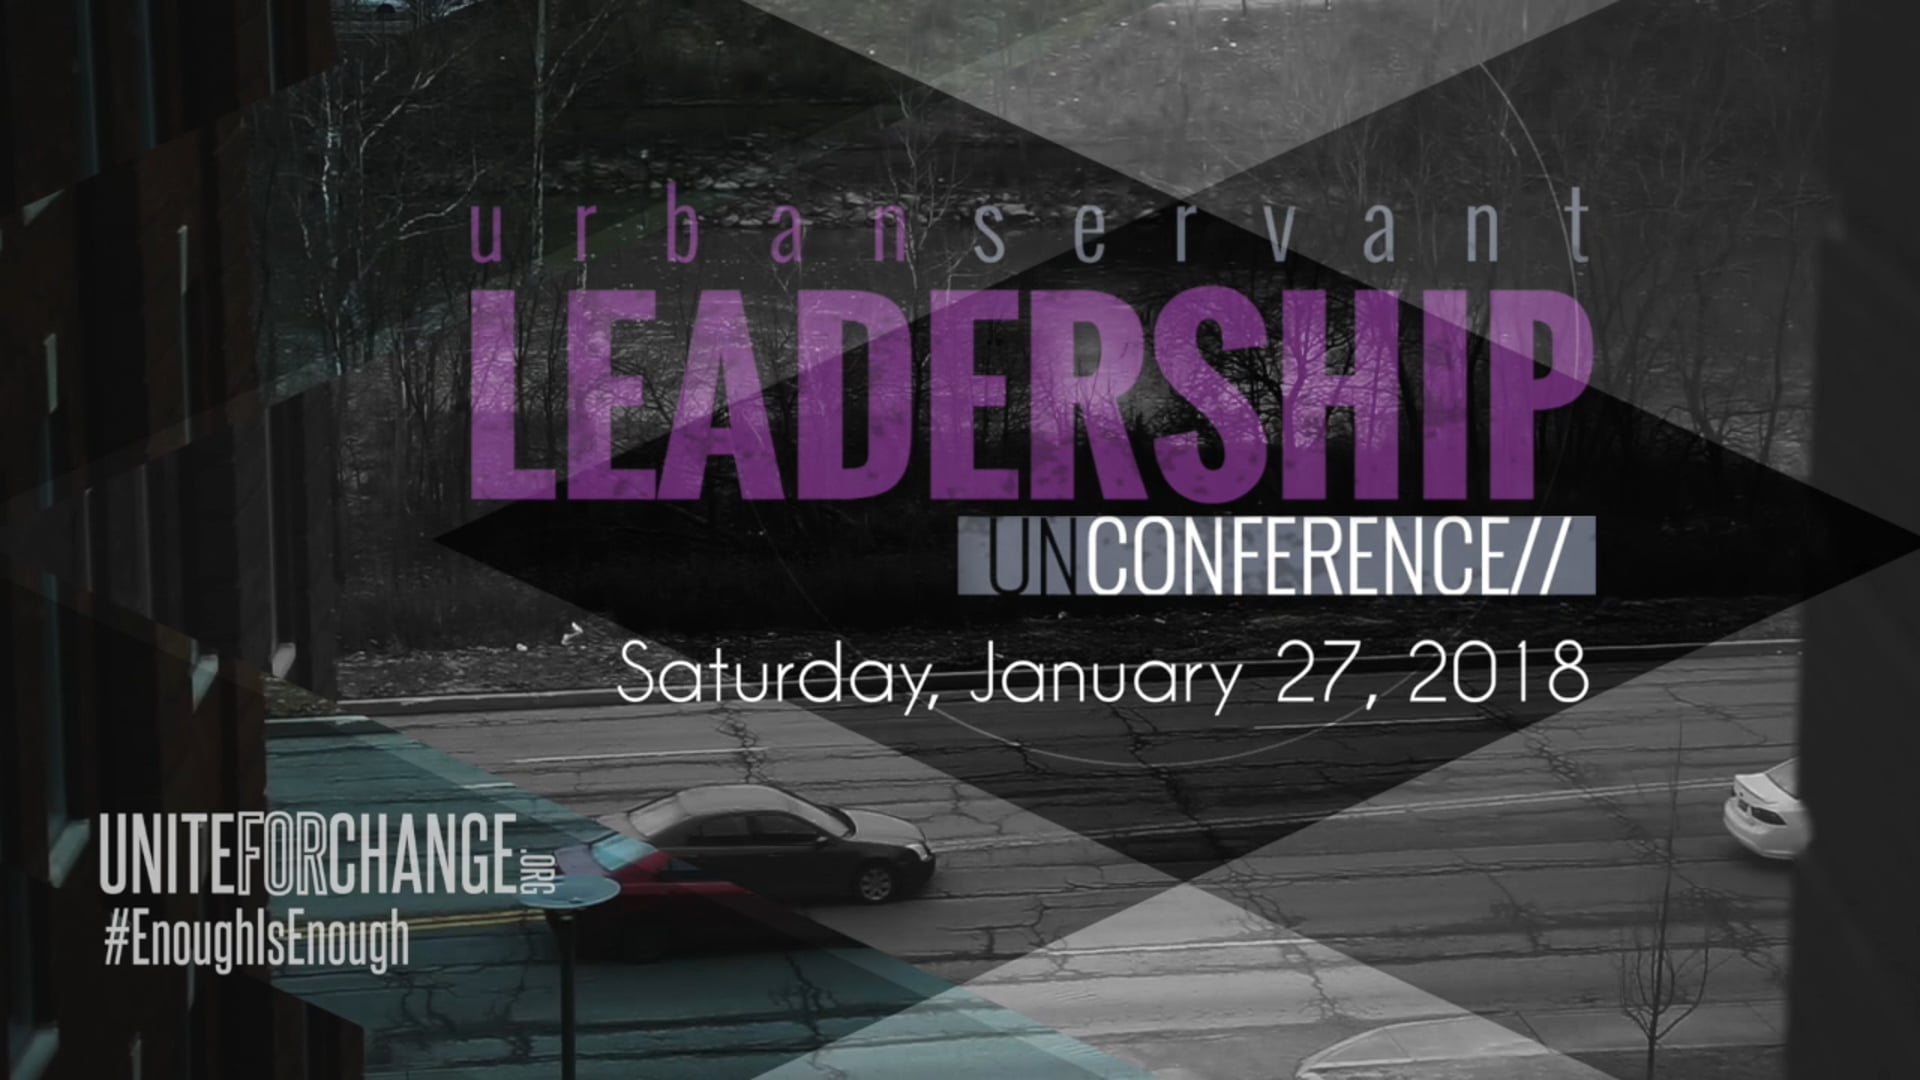 2018 Unite For Change Urban Servant Leadership Unconference